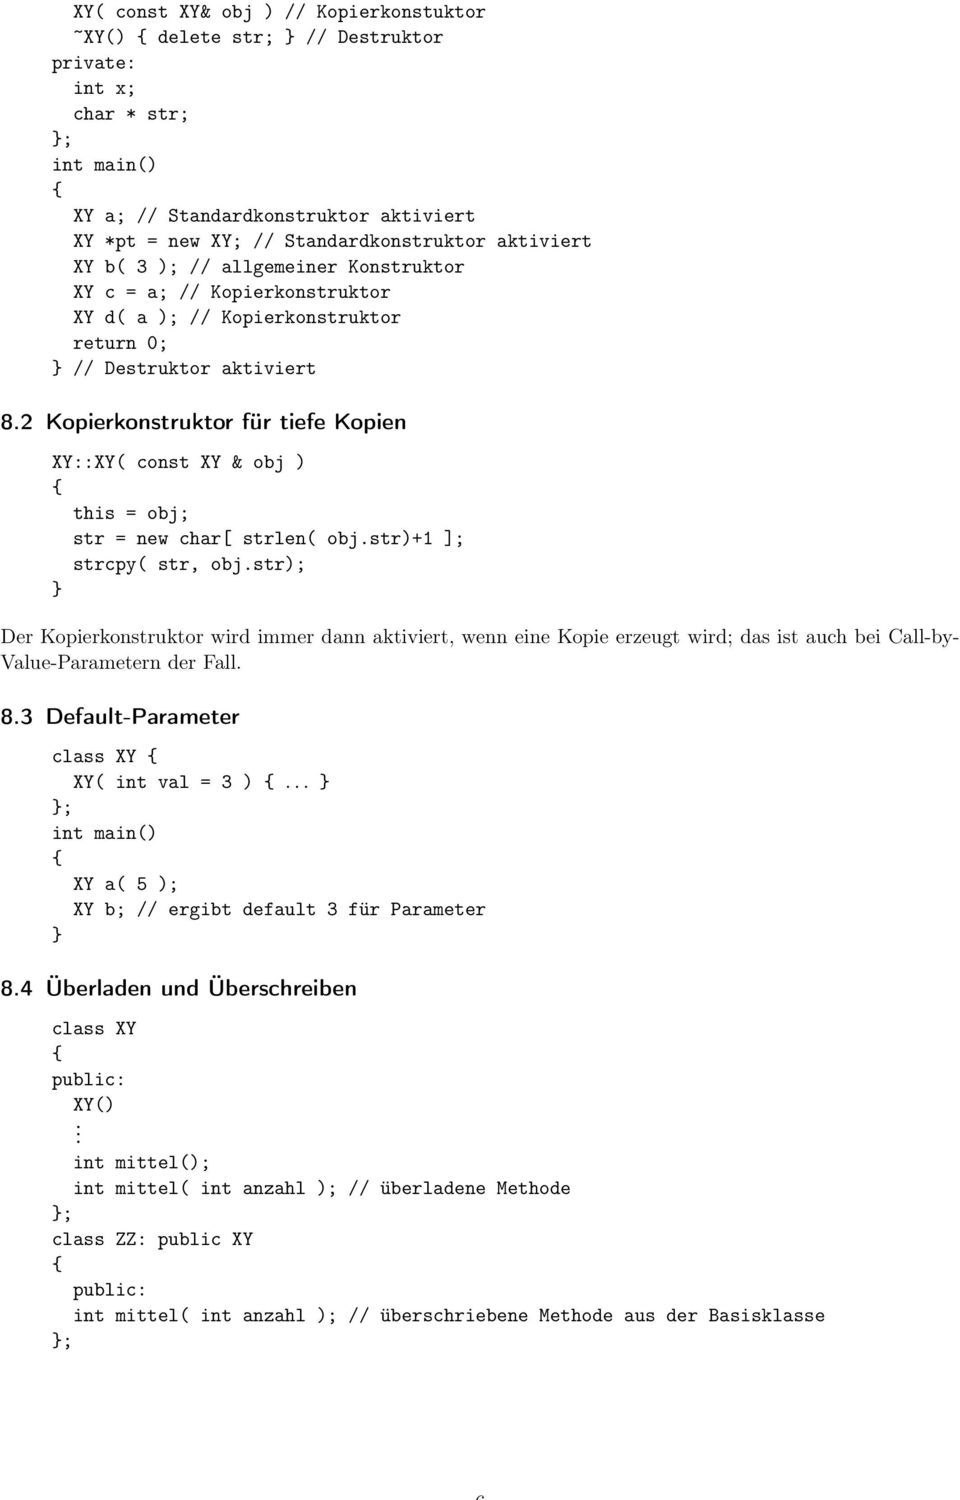 2 Kopierkonstruktor für tiefe Kopien XY::XY( const XY & obj ) this = obj; str = new char[ strlen( obj.str)+1 ]; strcpy( str, obj.